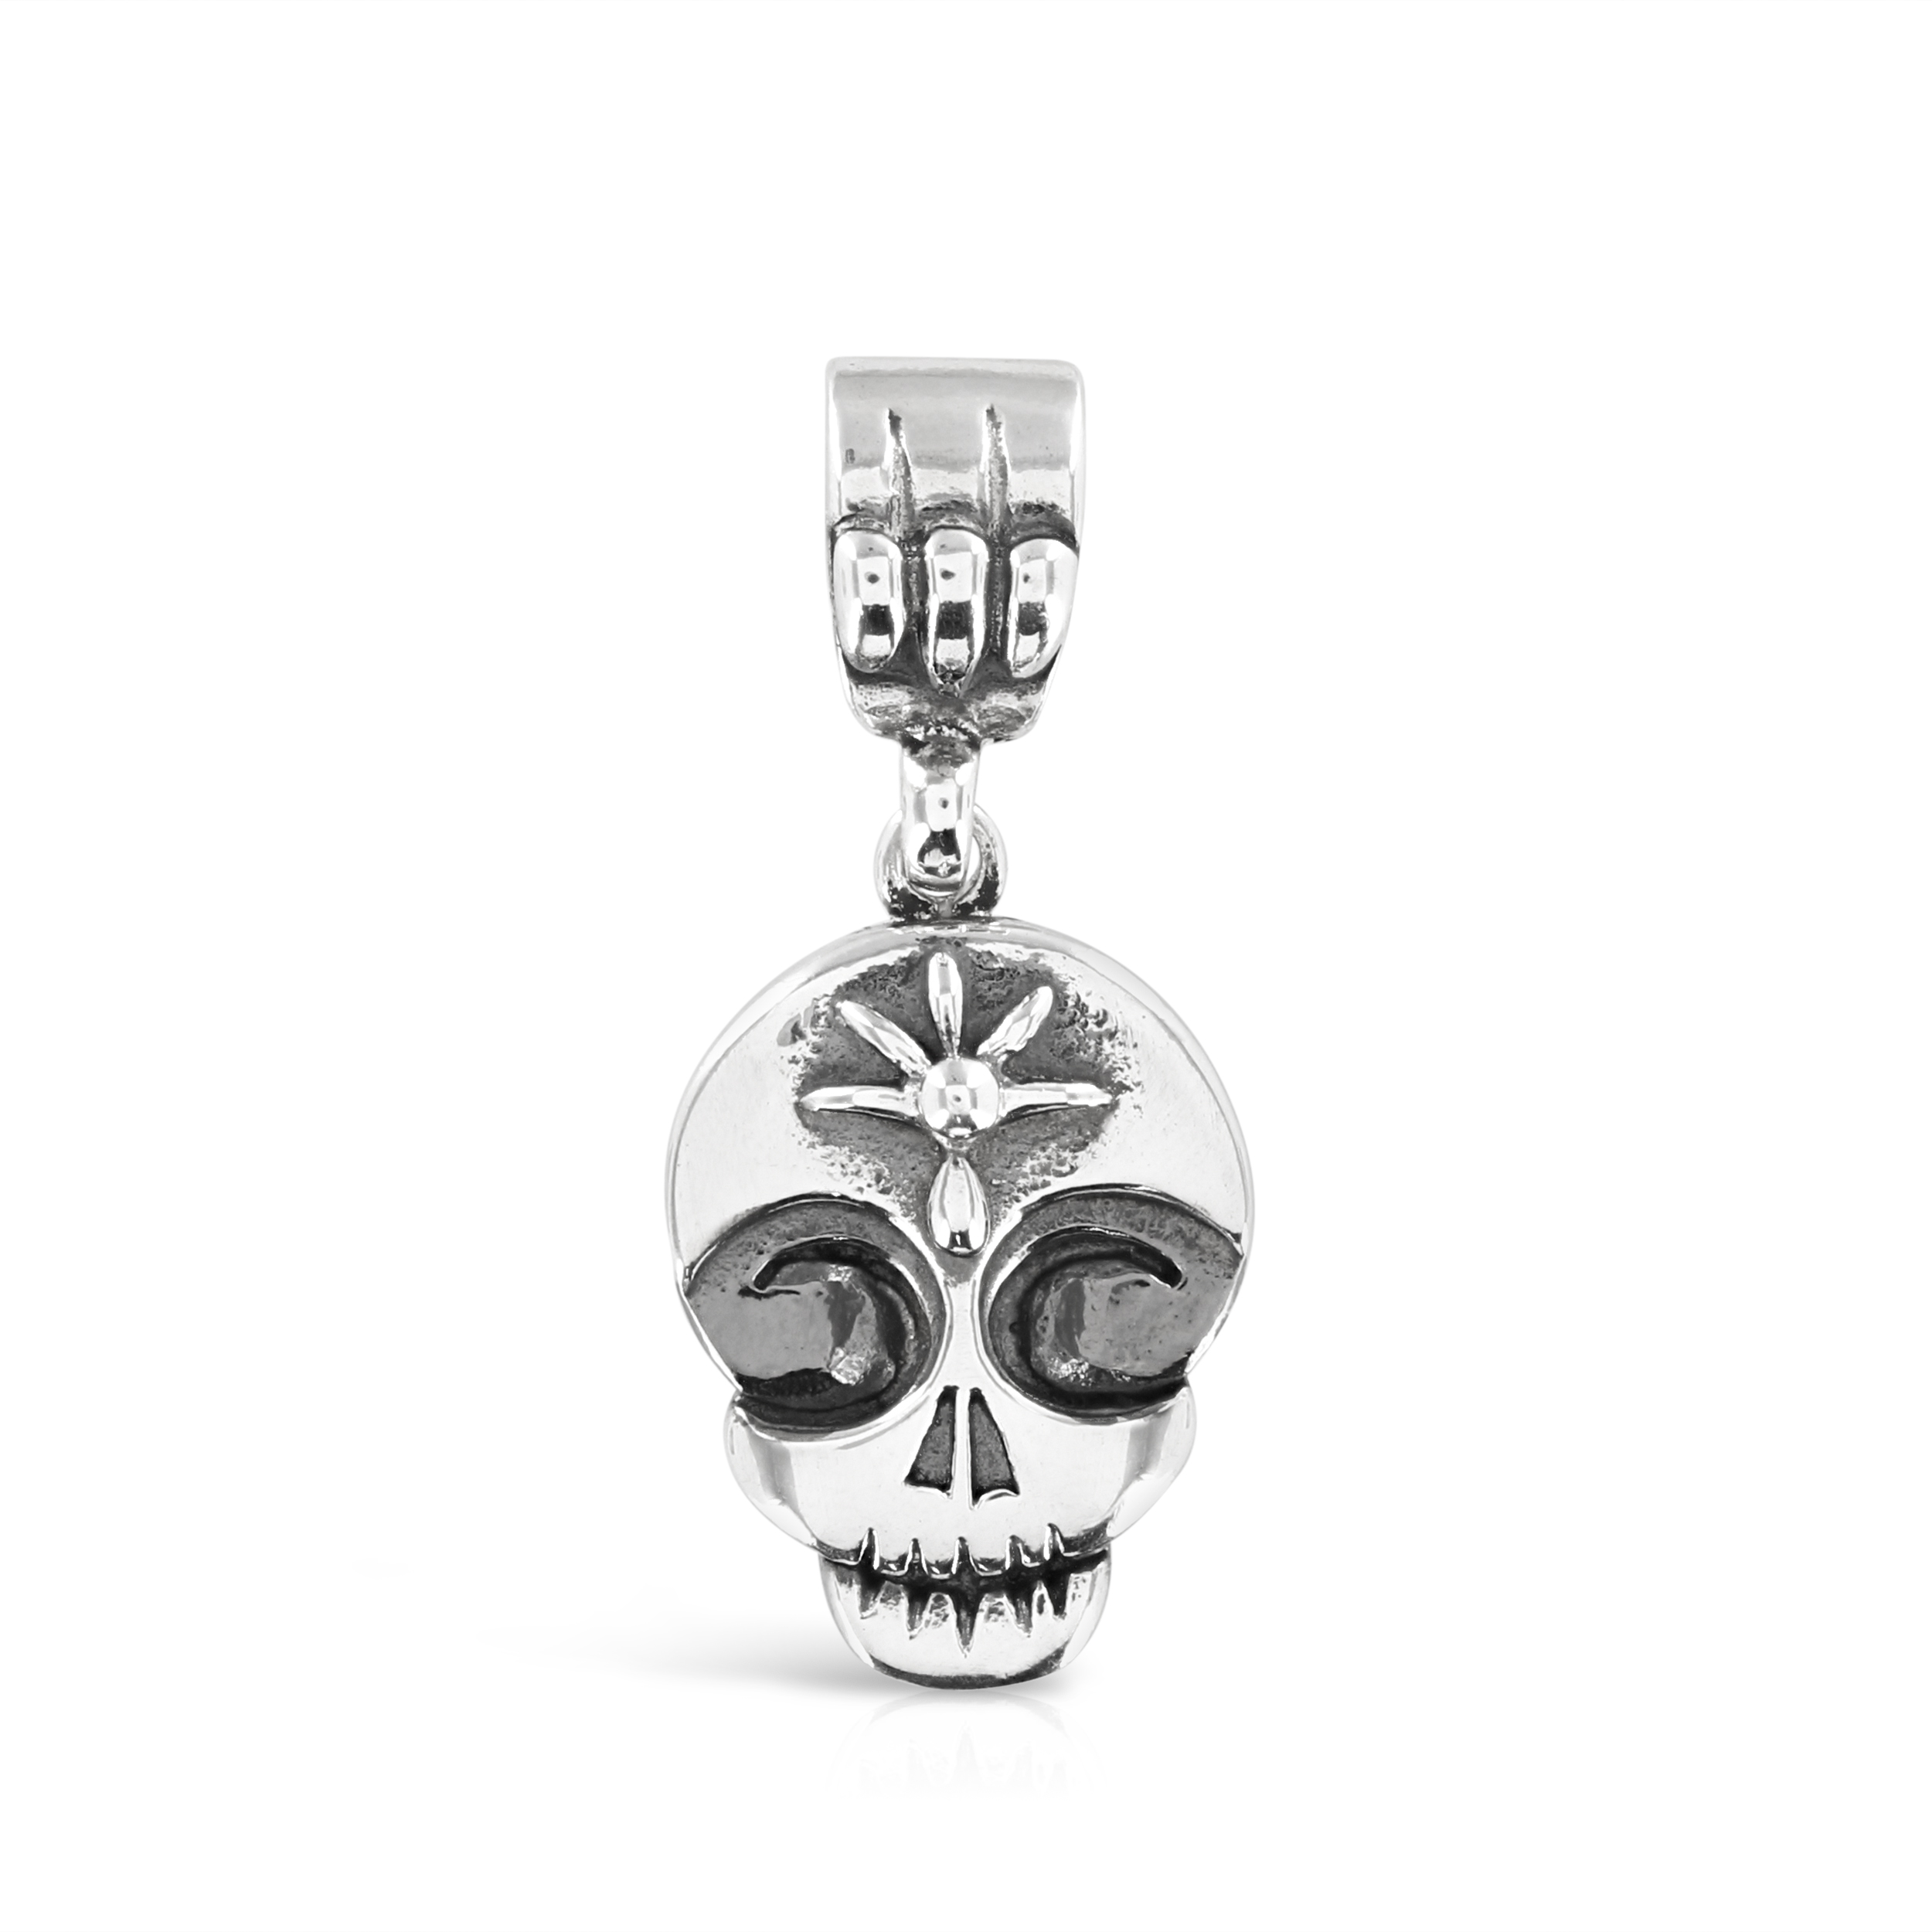 Skull pendant | Prey Jewellery